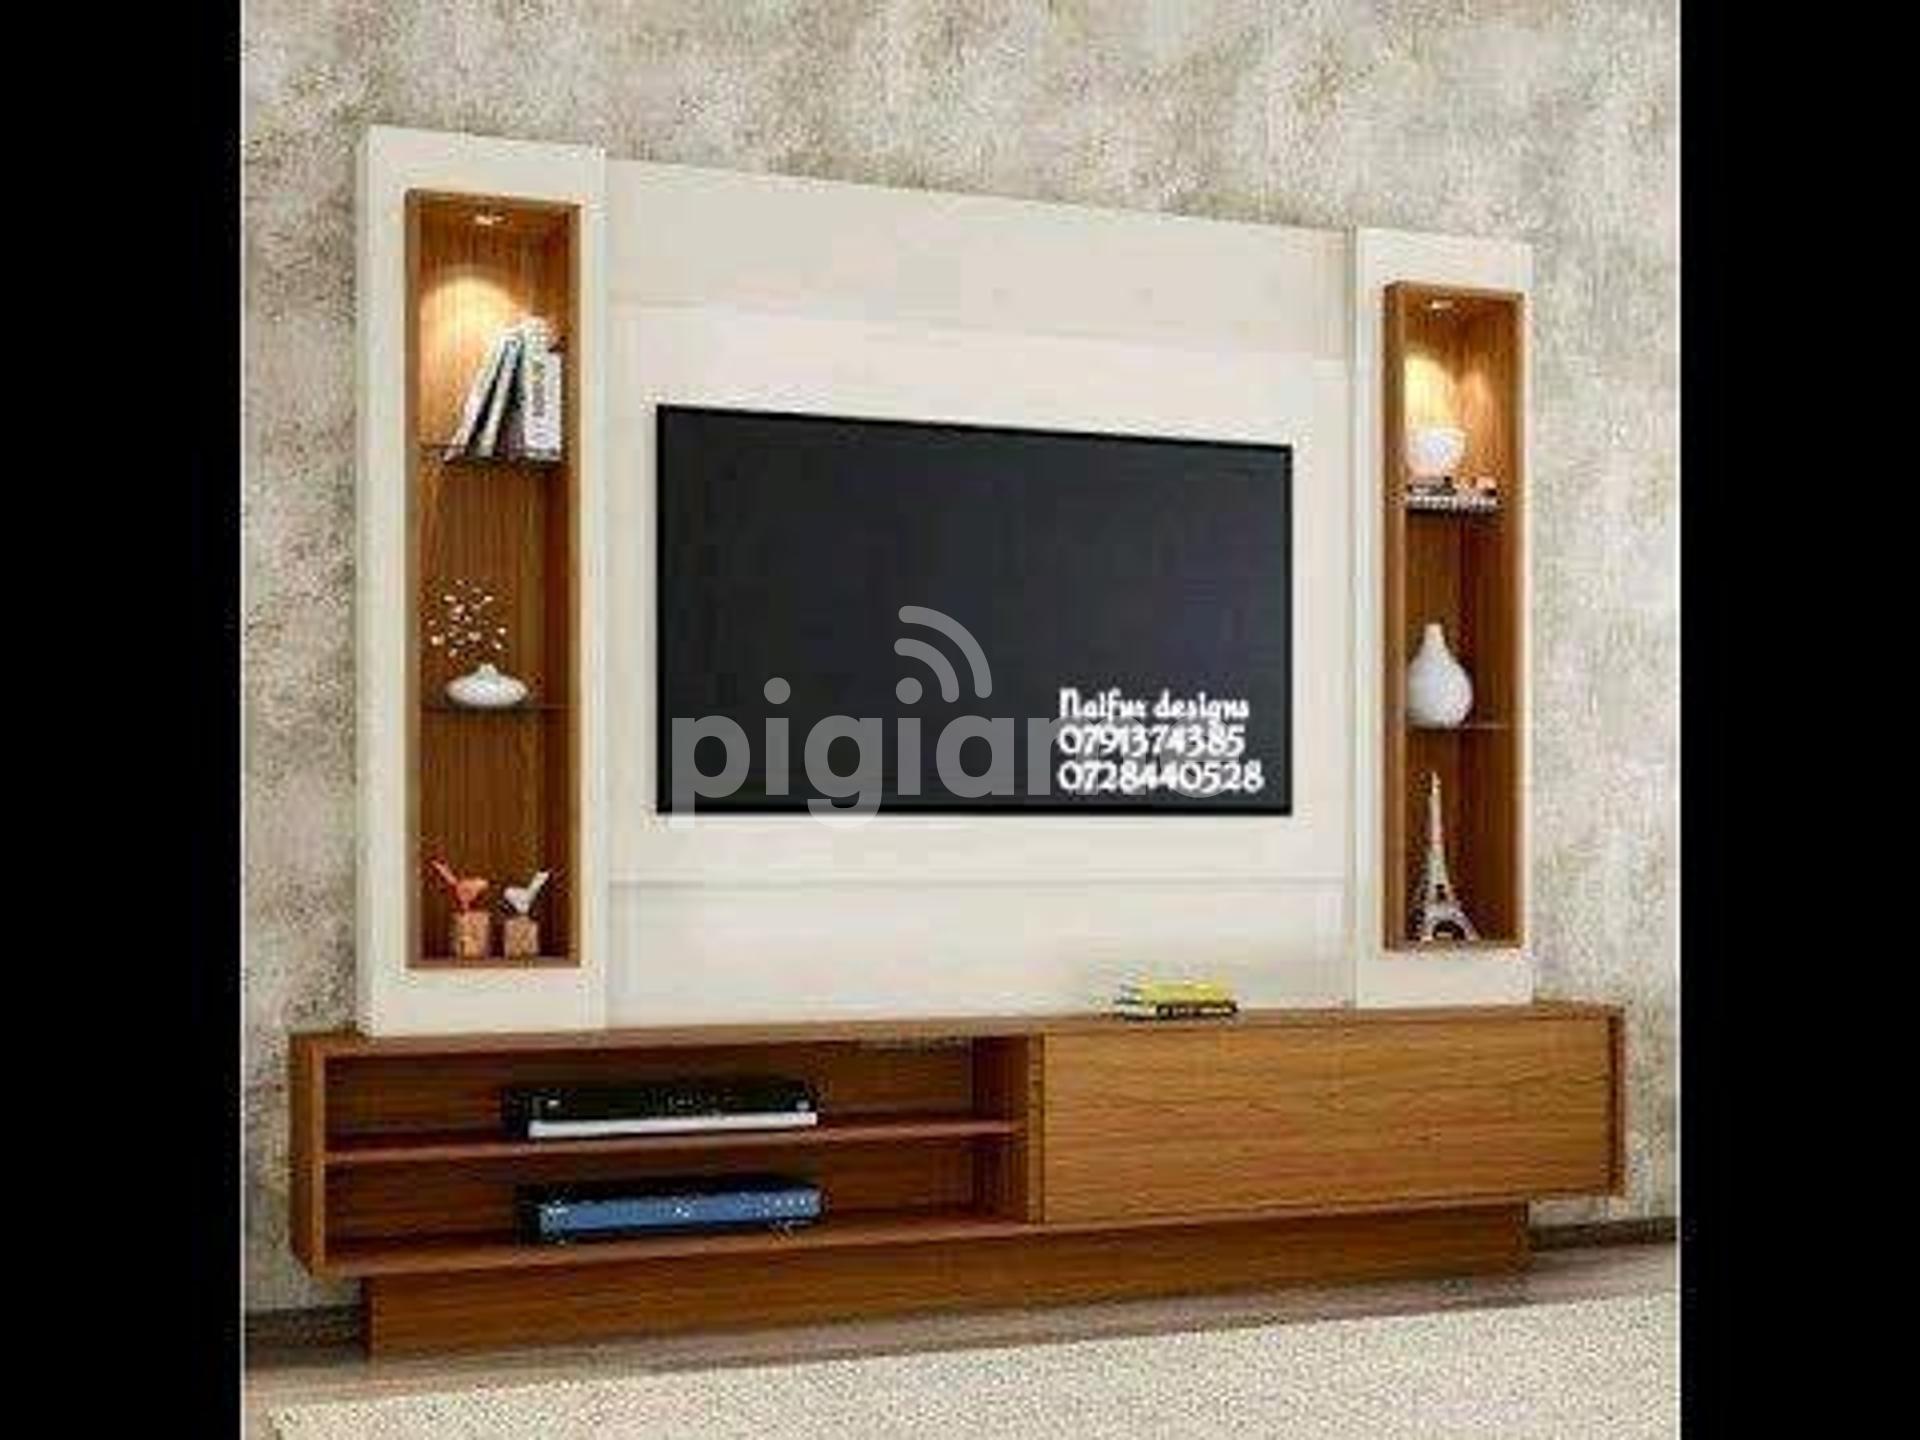 Modern Tv Stands For Sale In Nairobi Kenya Tv Cabinets For Sale In Nairobi Kenya Wall Decorations In Utawala Pigiame